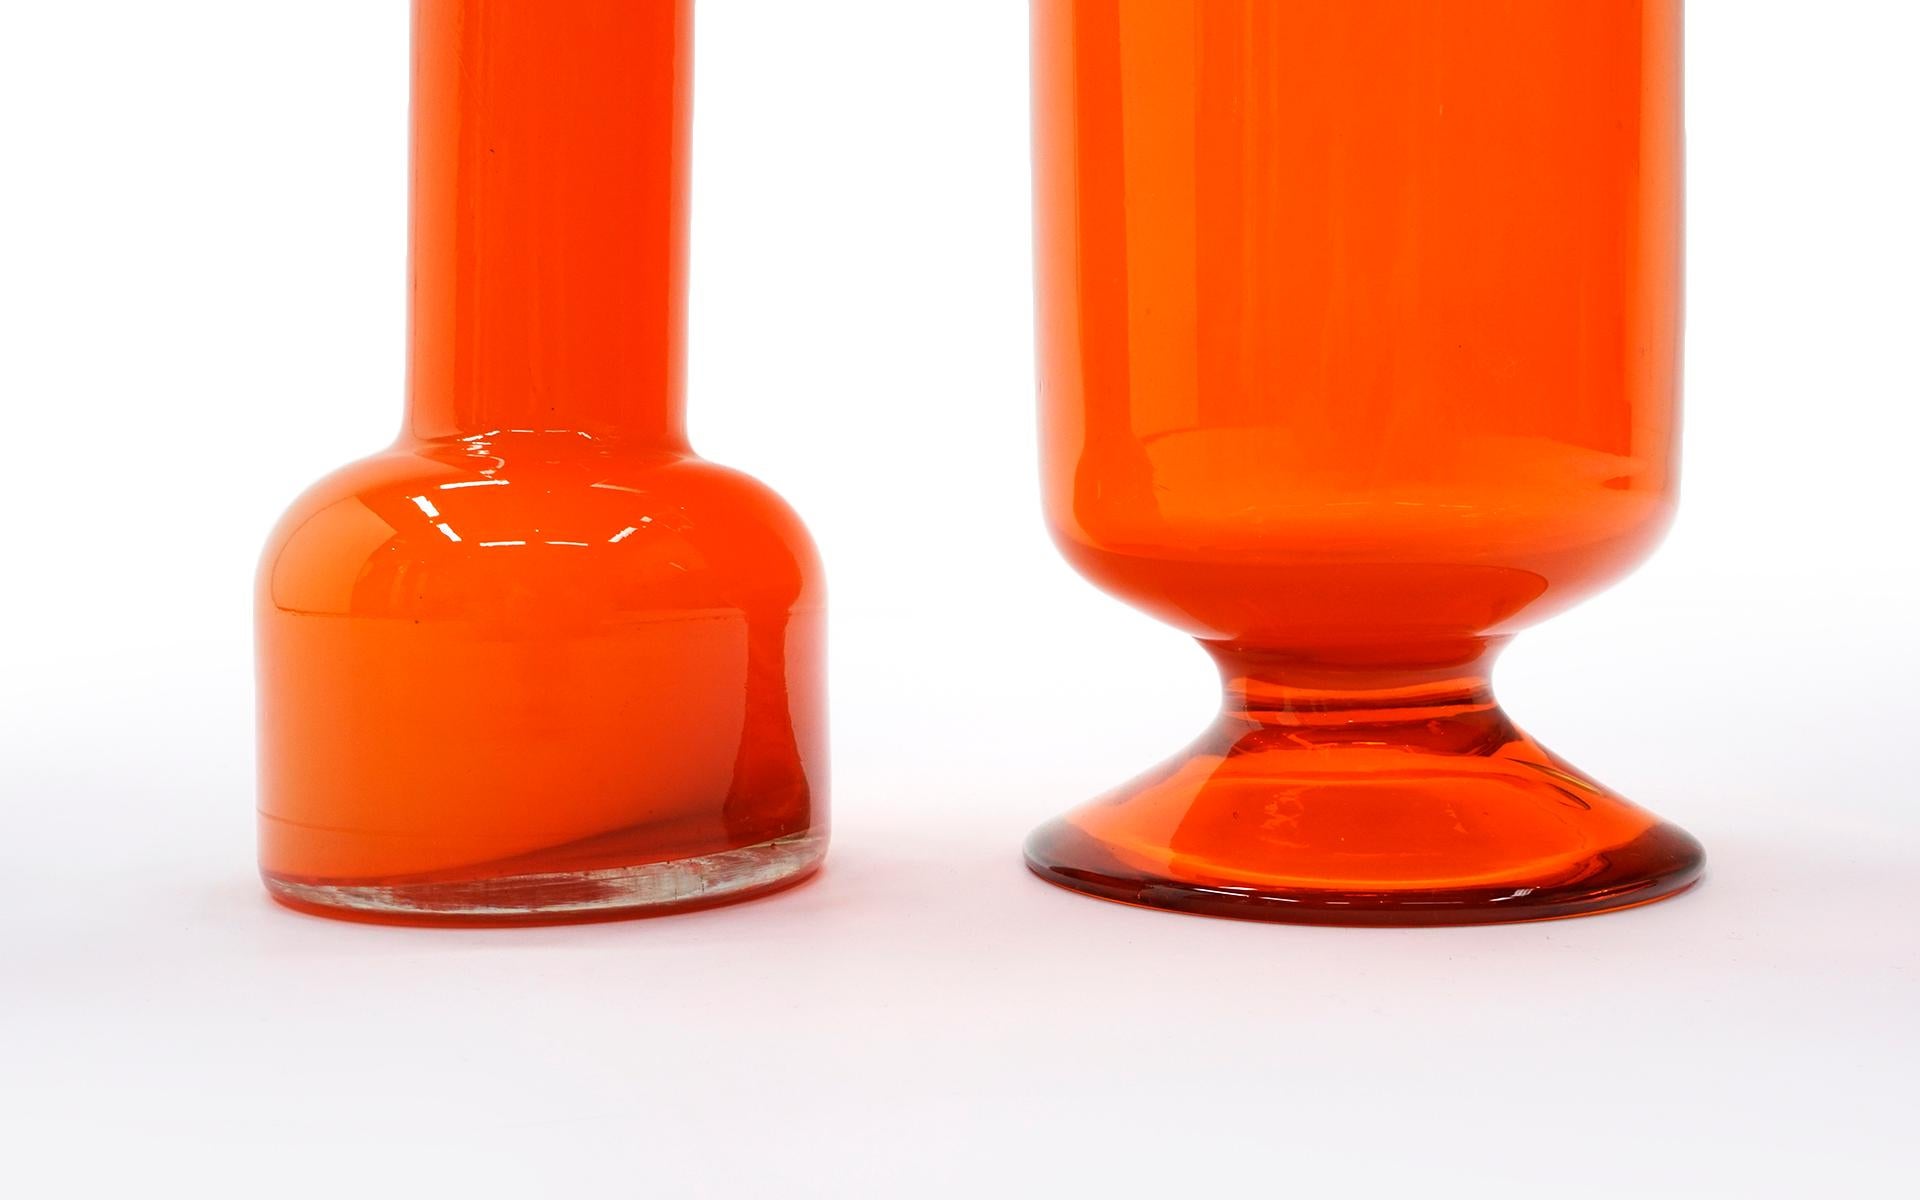 American Orange Blenko (?) Art Glass Vase and Decanter